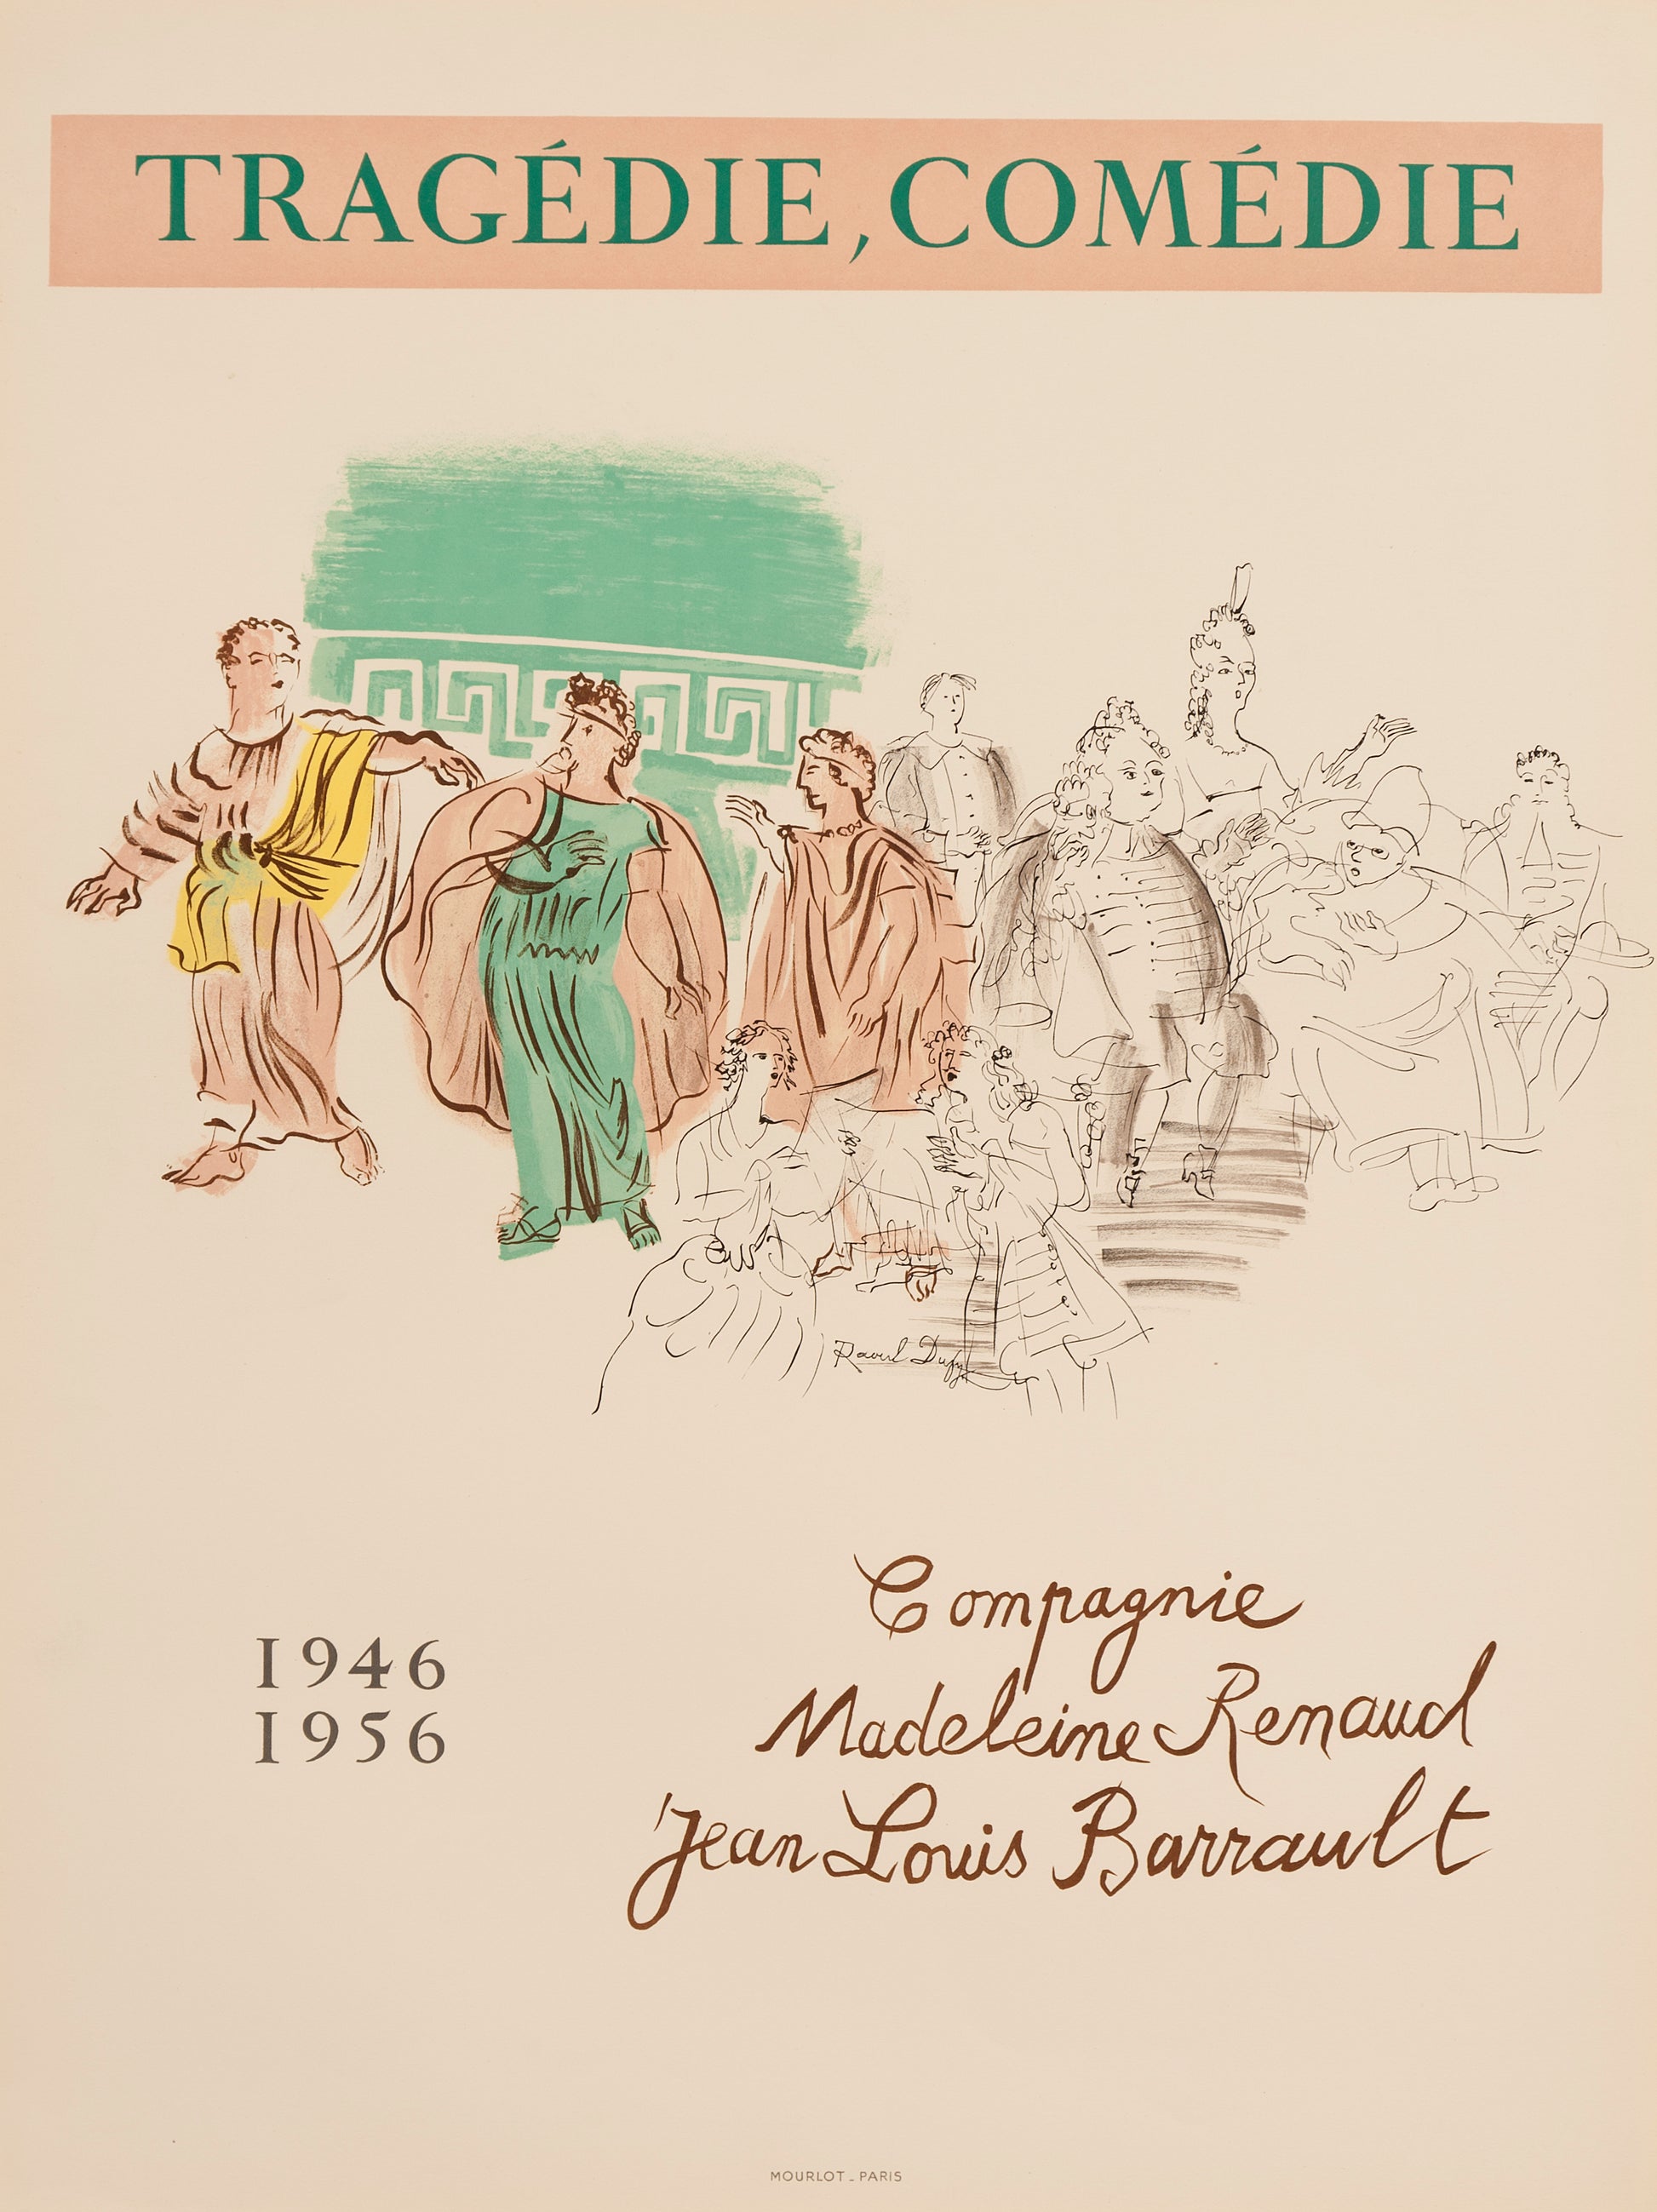 Tragedie, Comédie  jean-Louis Barrault, Madeleine Renaud - by Raoul Dufy, 1954-1956 - Mourlot Editions - Fine_Art - Poster - Lithograph - Wall Art - Vintage - Prints - Original